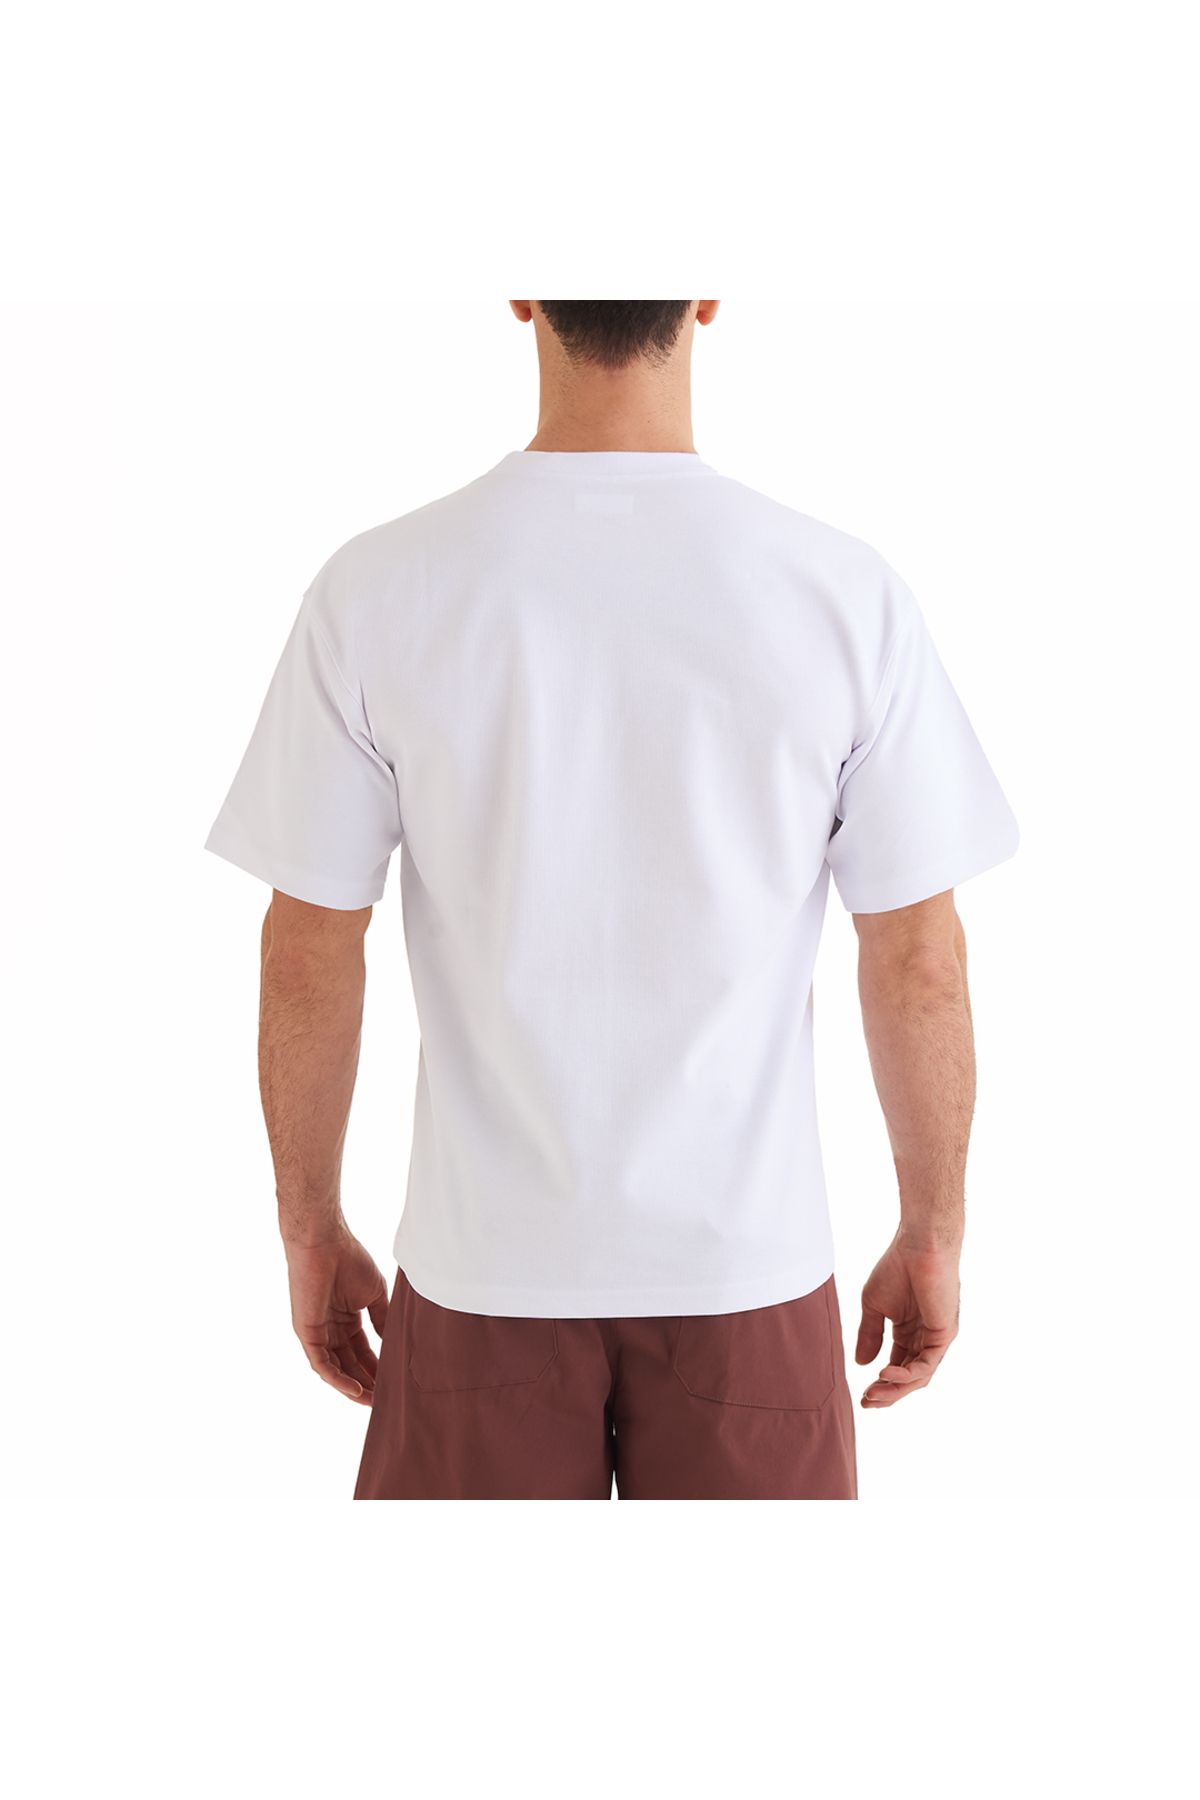 Columbia CSC Heritage Erkek Kısa Kollu T-shirt